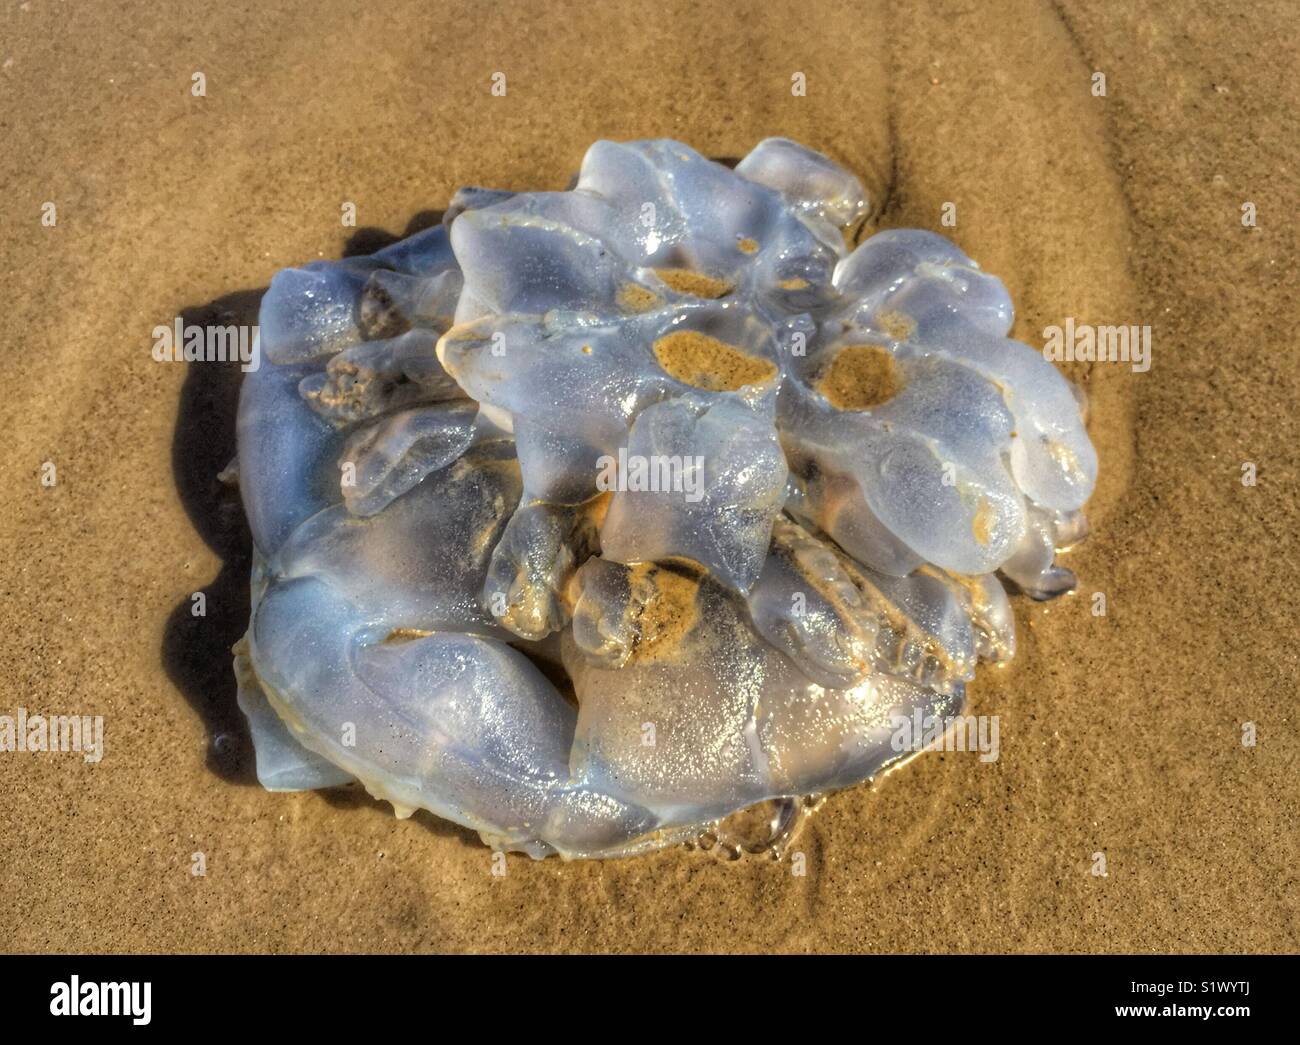 Barrel Jellyfish Washed Up Cornwall Stock Photo